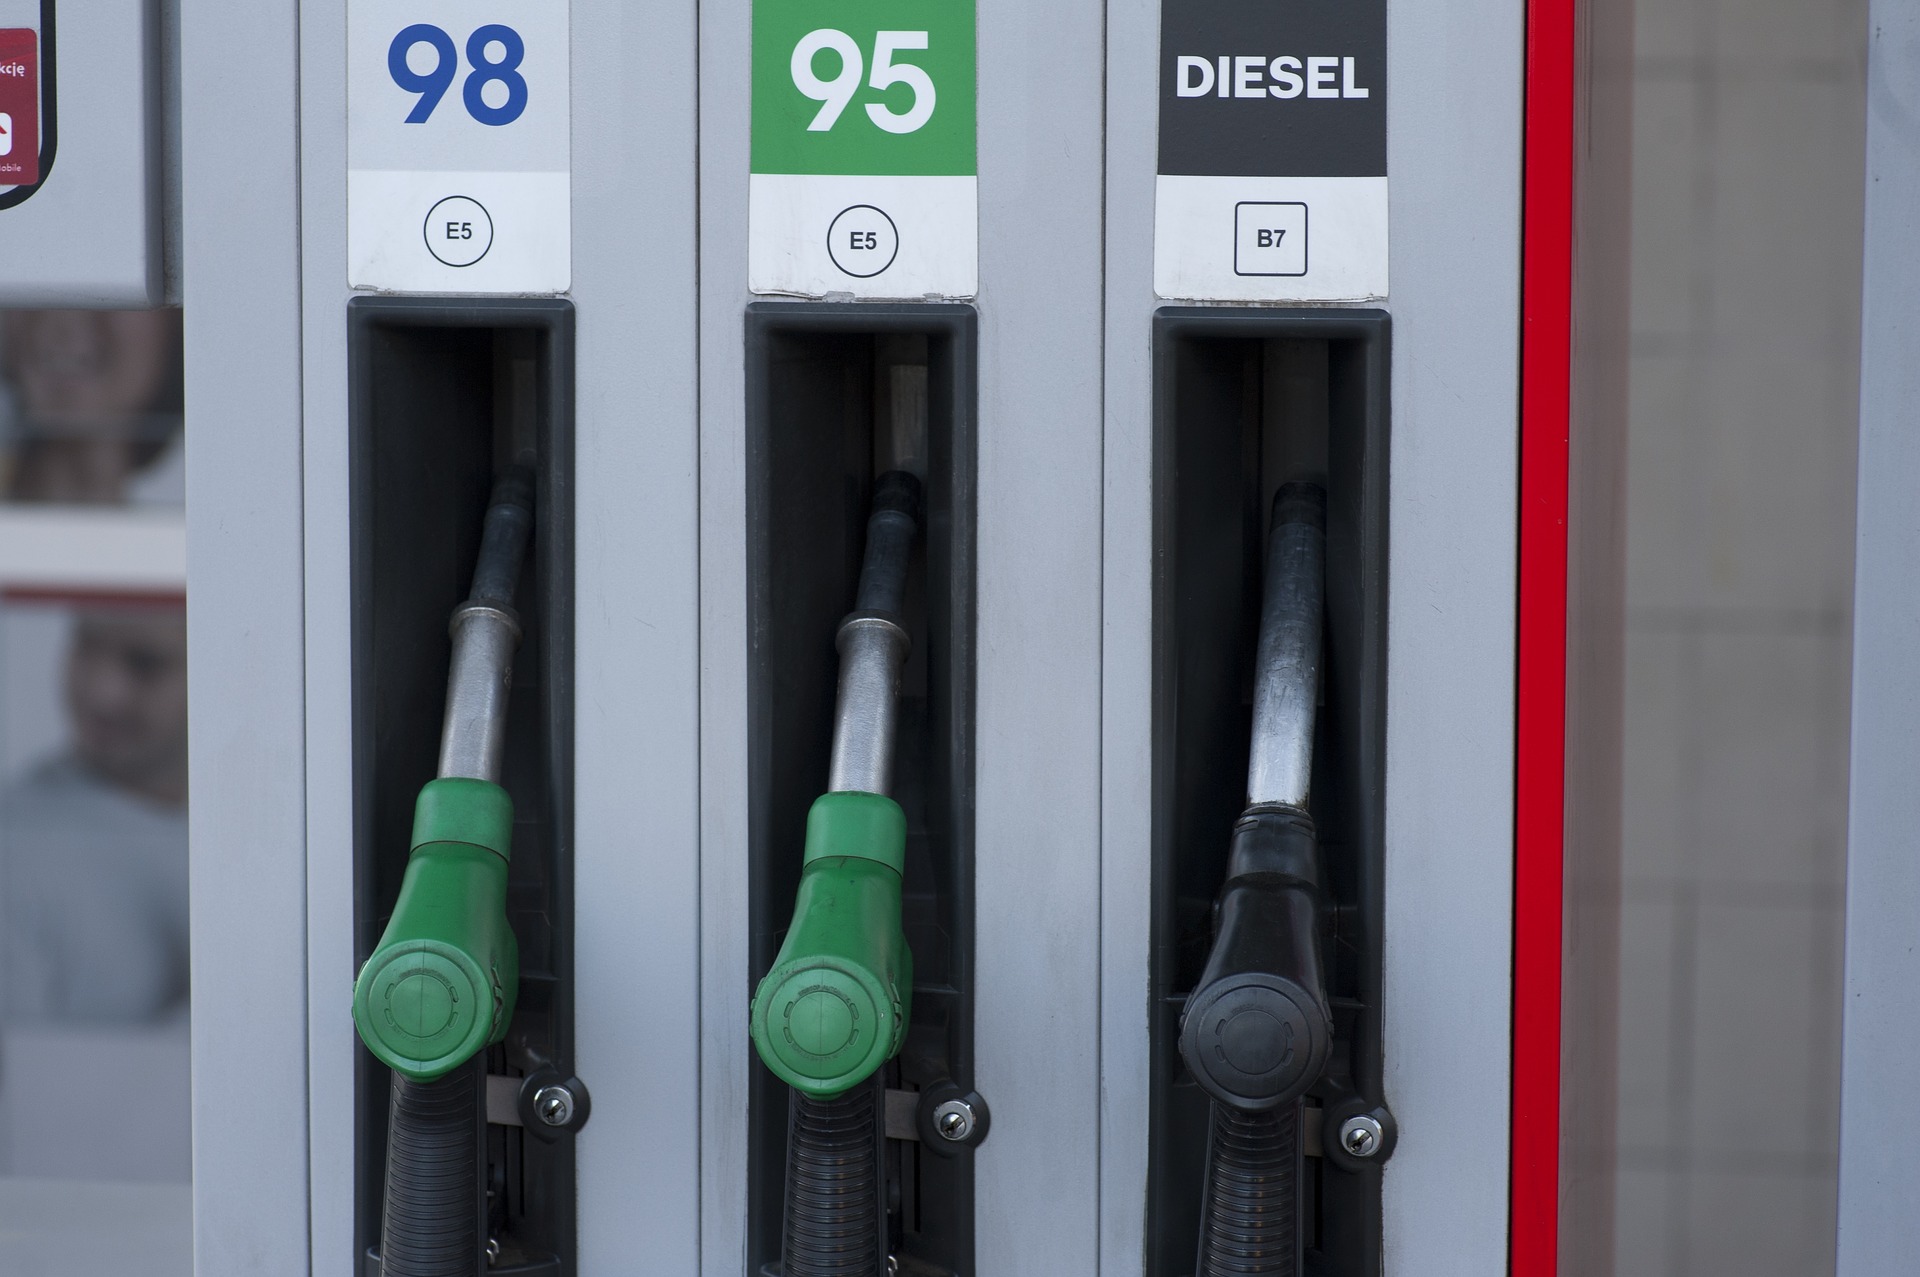 Аналитик ФНЭБ Юшков заявил, что цены на бензин снизились в сентябре из-за фактора сезонности